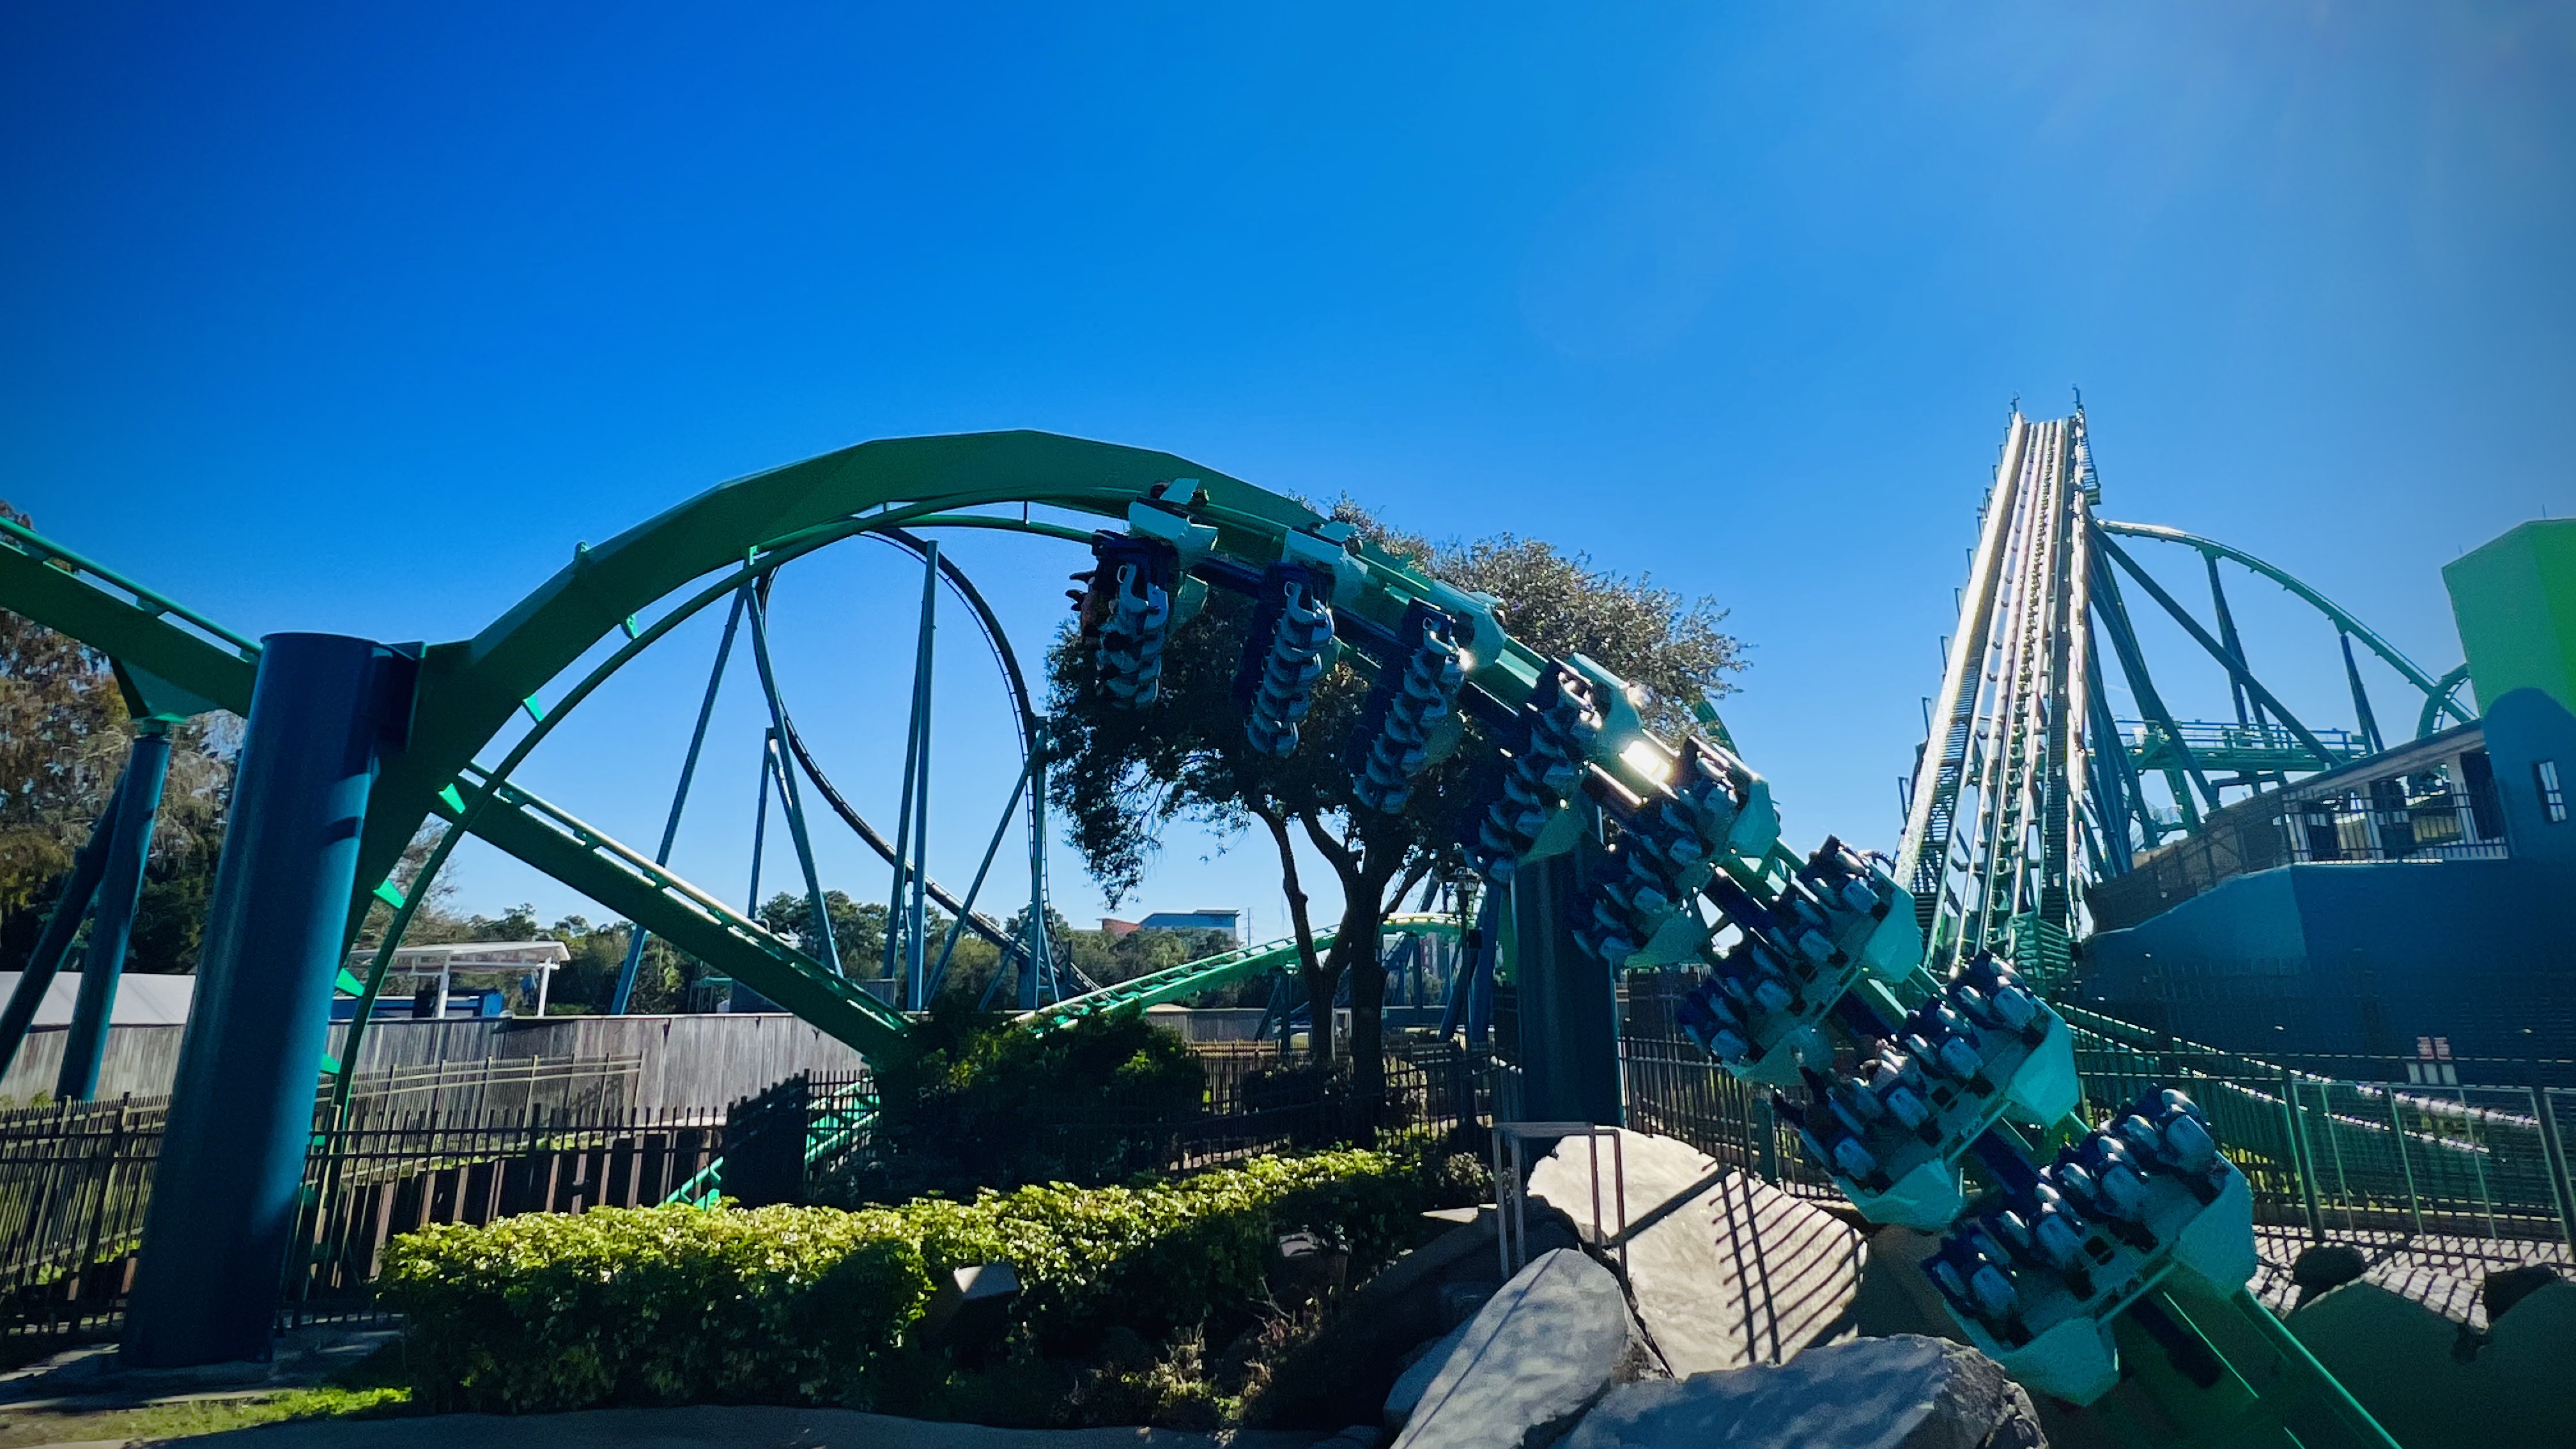 Manta® Roller Coaster - Experience Orlando's Best Thrill Rides at SeaWorld  Orlando